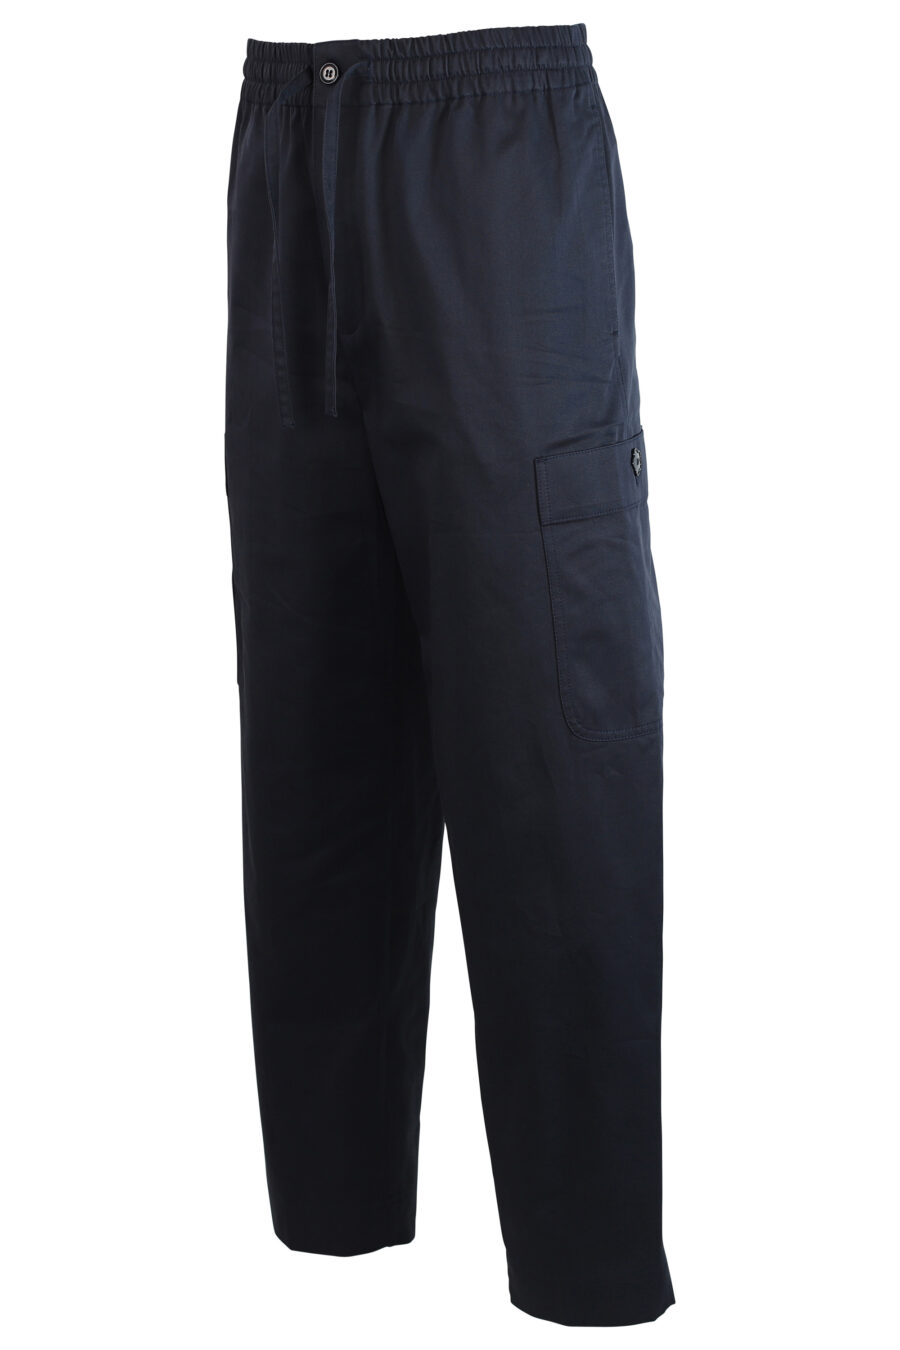 Pantalon bleu avec poche latérale et logo - 3612230409323 2